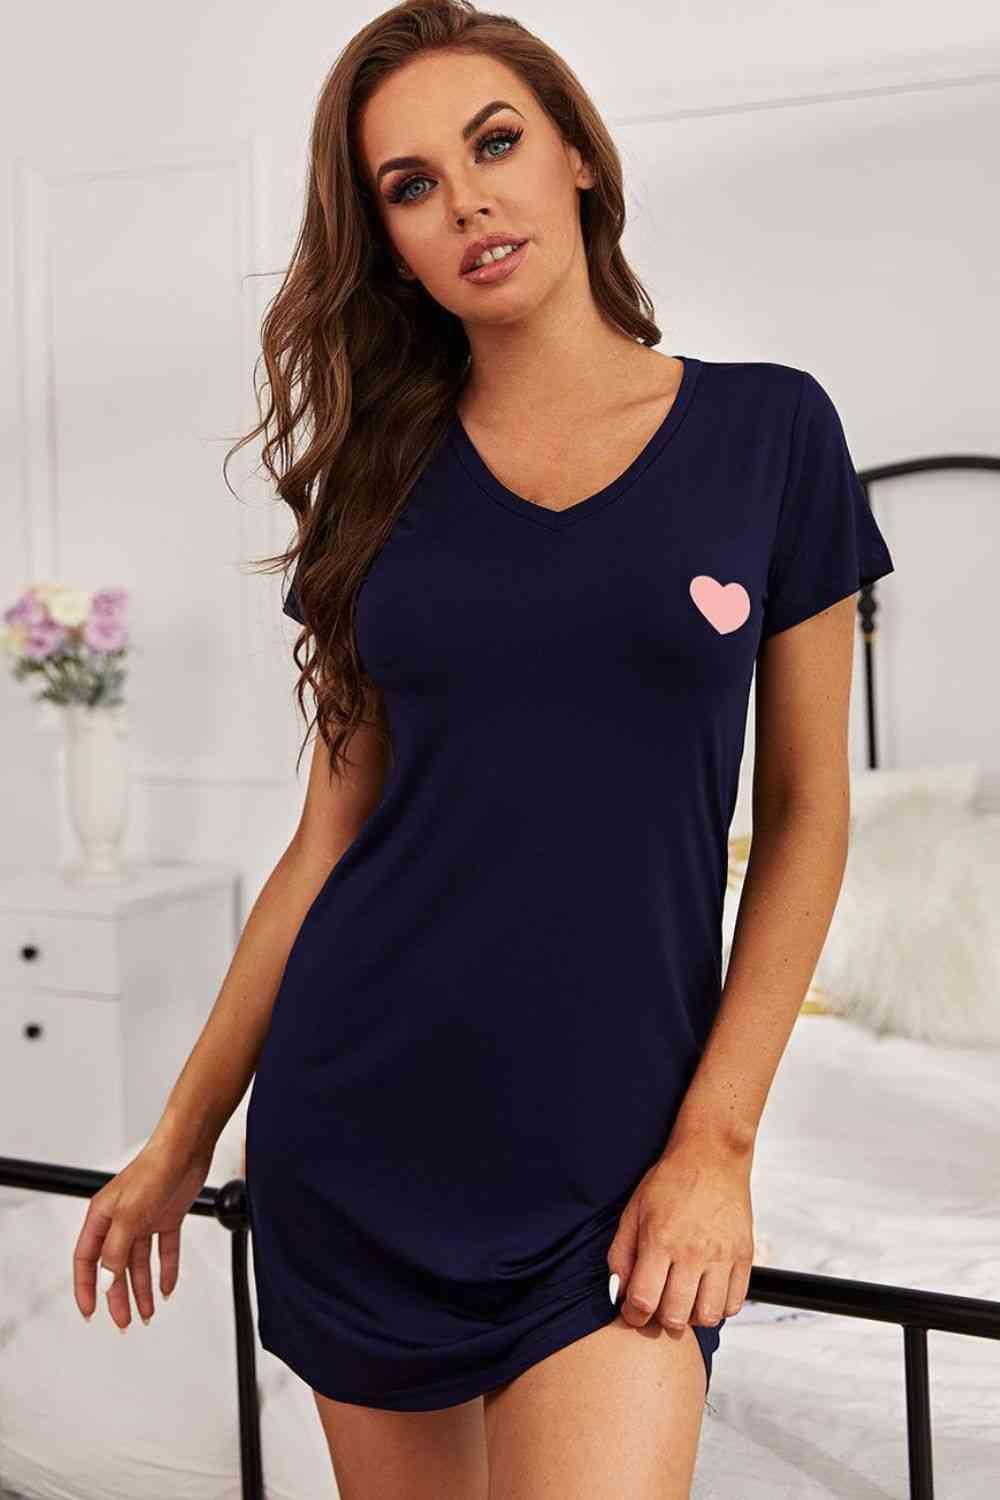 Heart Graphic Short Sleeve Navy Blue Nightgown - MXSTUDIO.COM